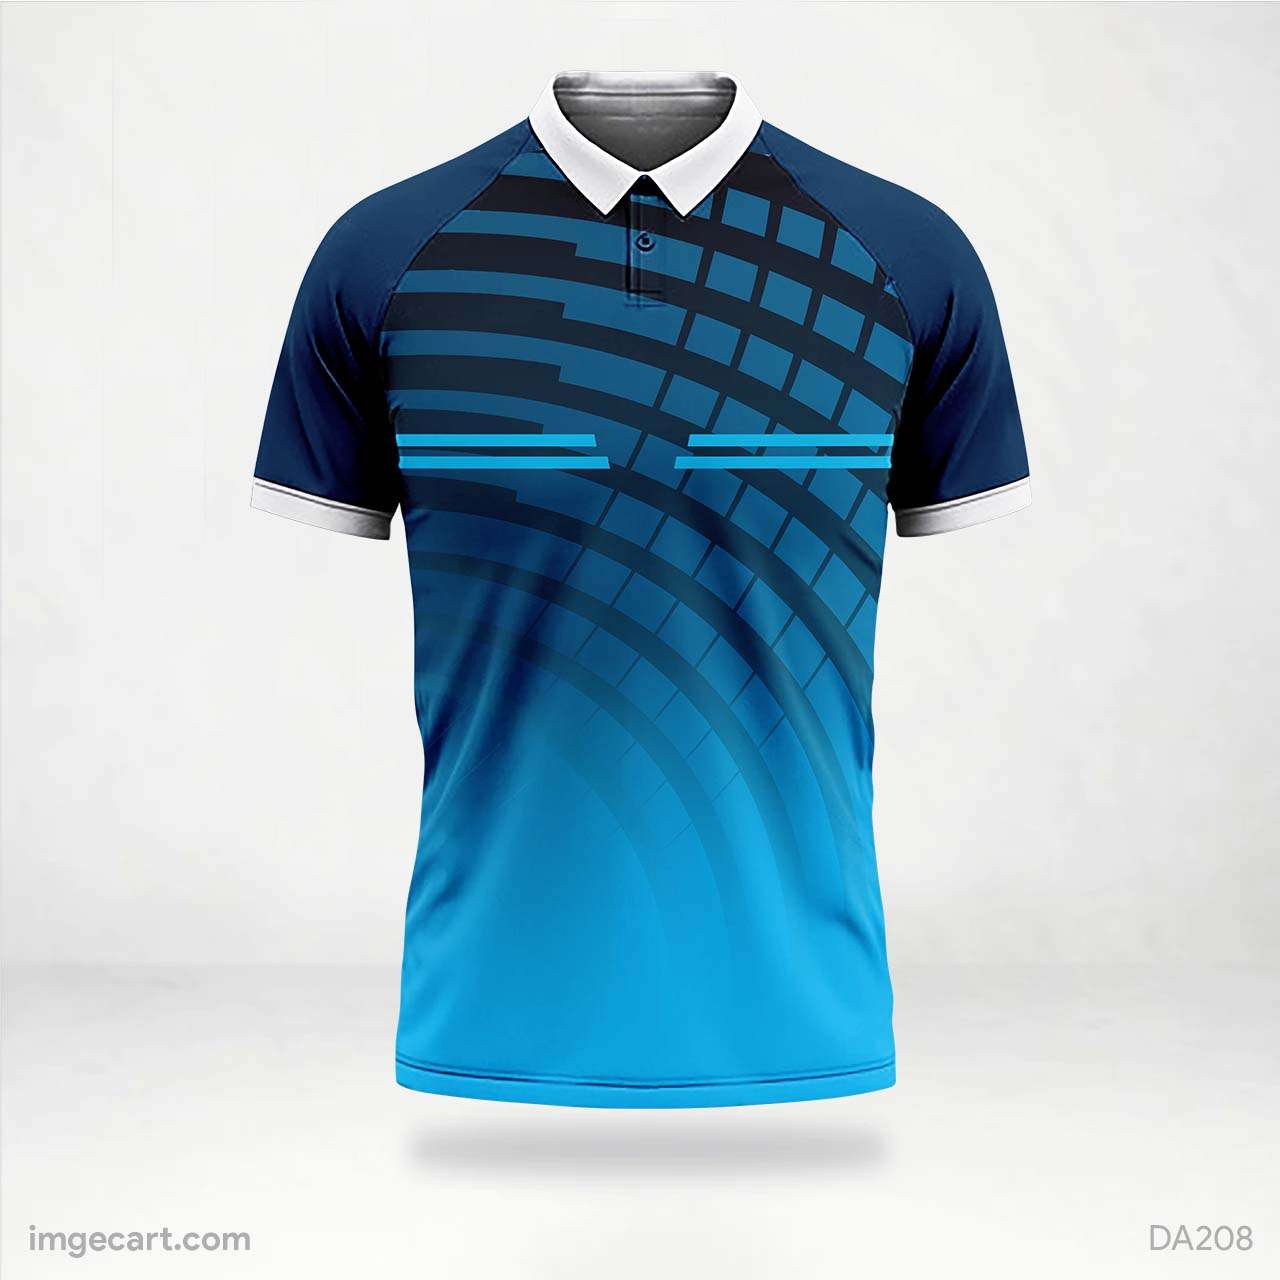 Cricket Champions tshirt design vector - Buy t-shirt designs